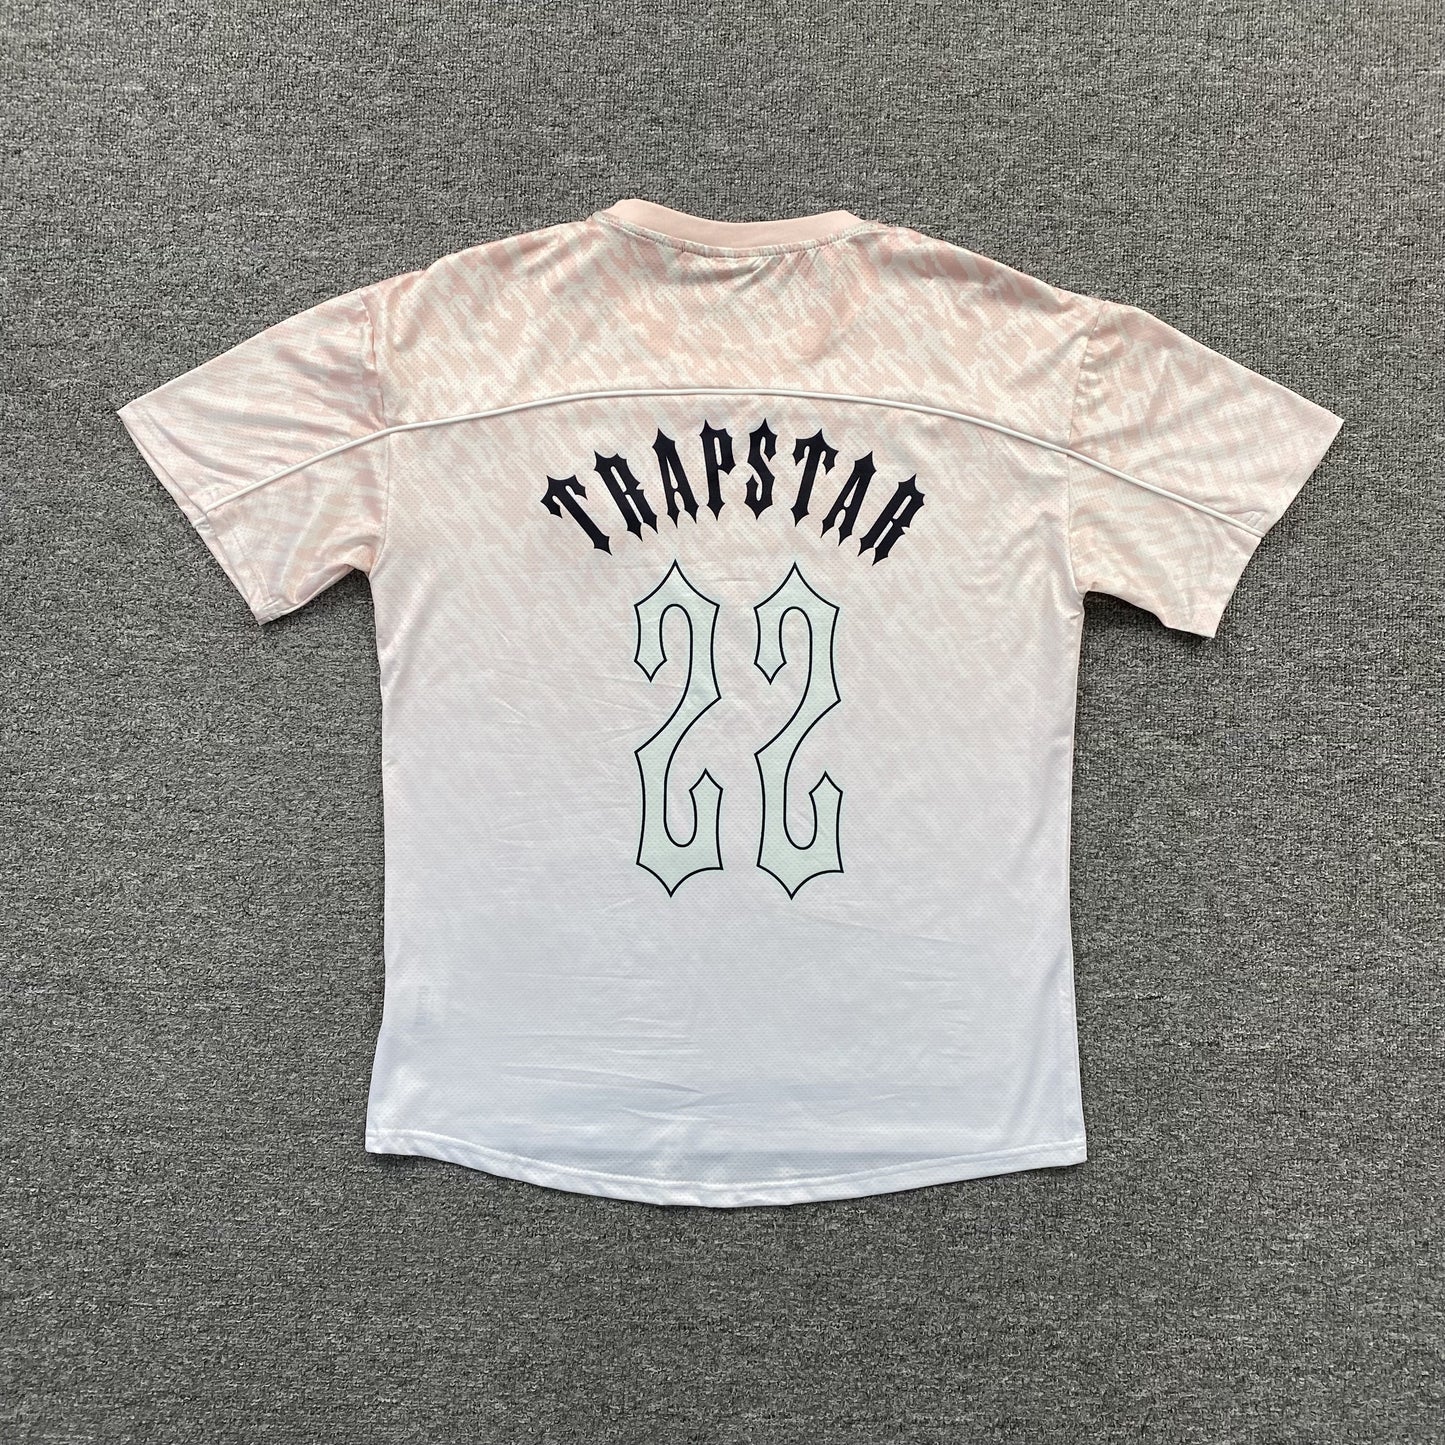 Mode Trapstar T-shirt de Football pour hommes et femmes vêtements de mode maillot de Football